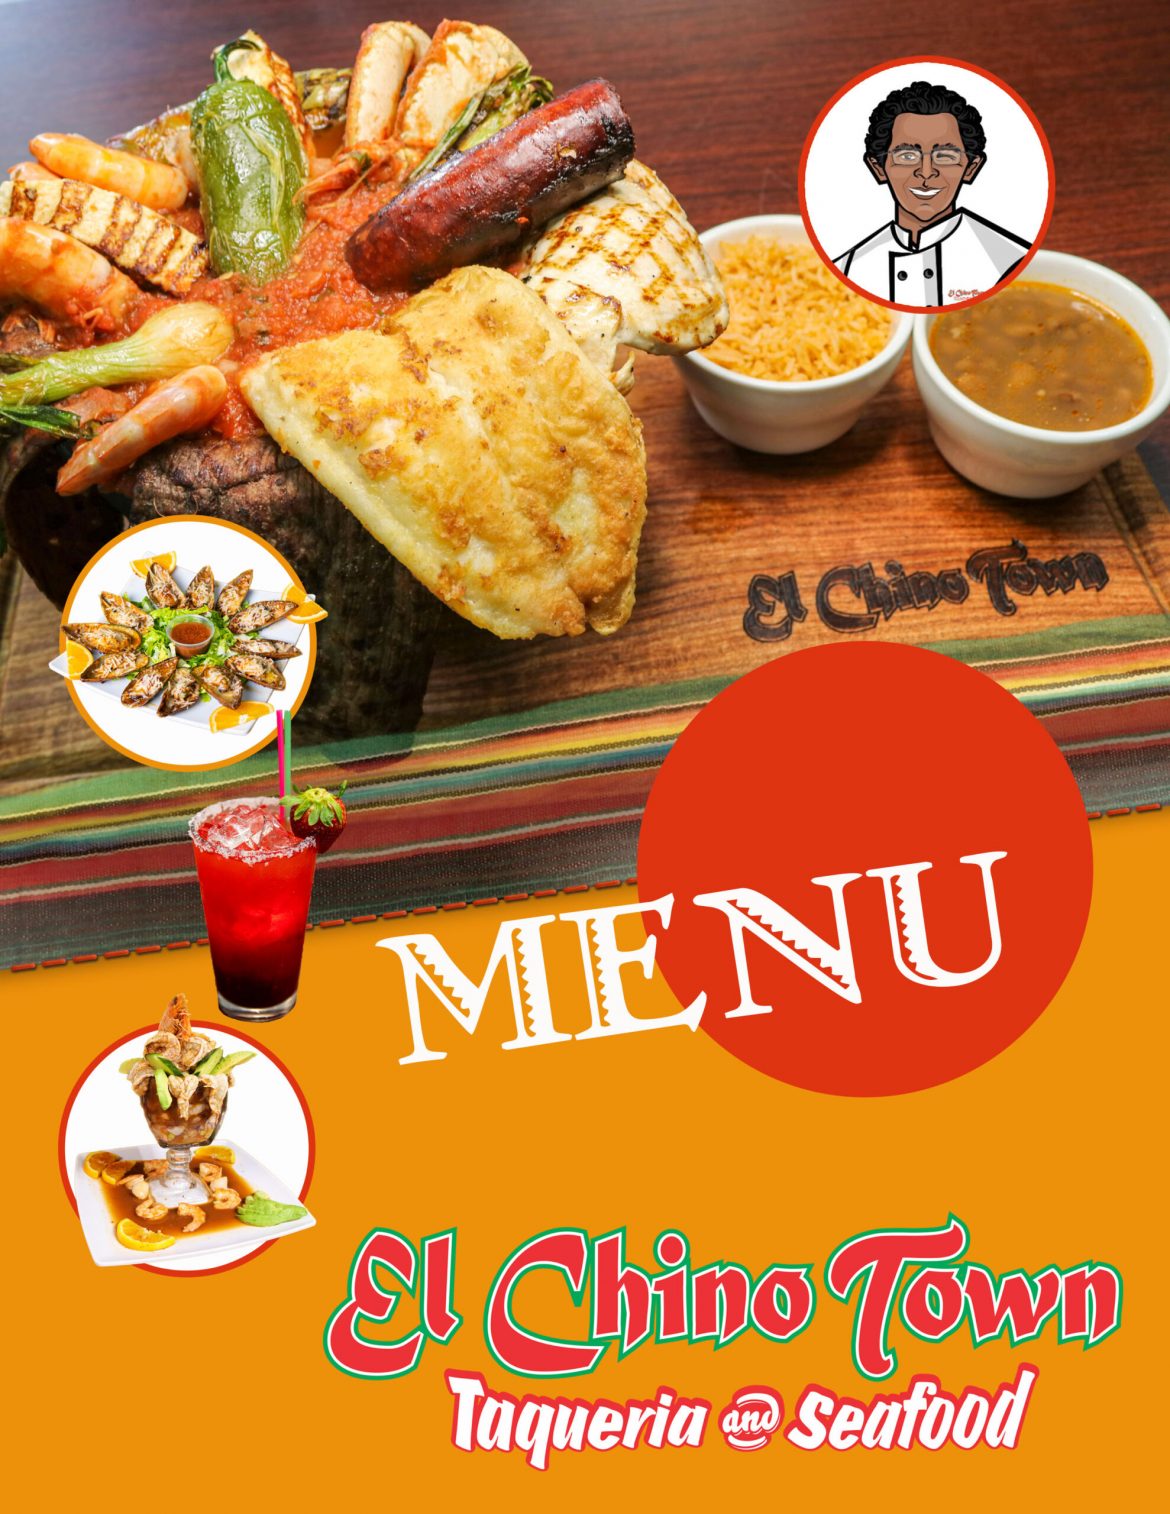 Menu – El Chino Taqueria and Sea Food